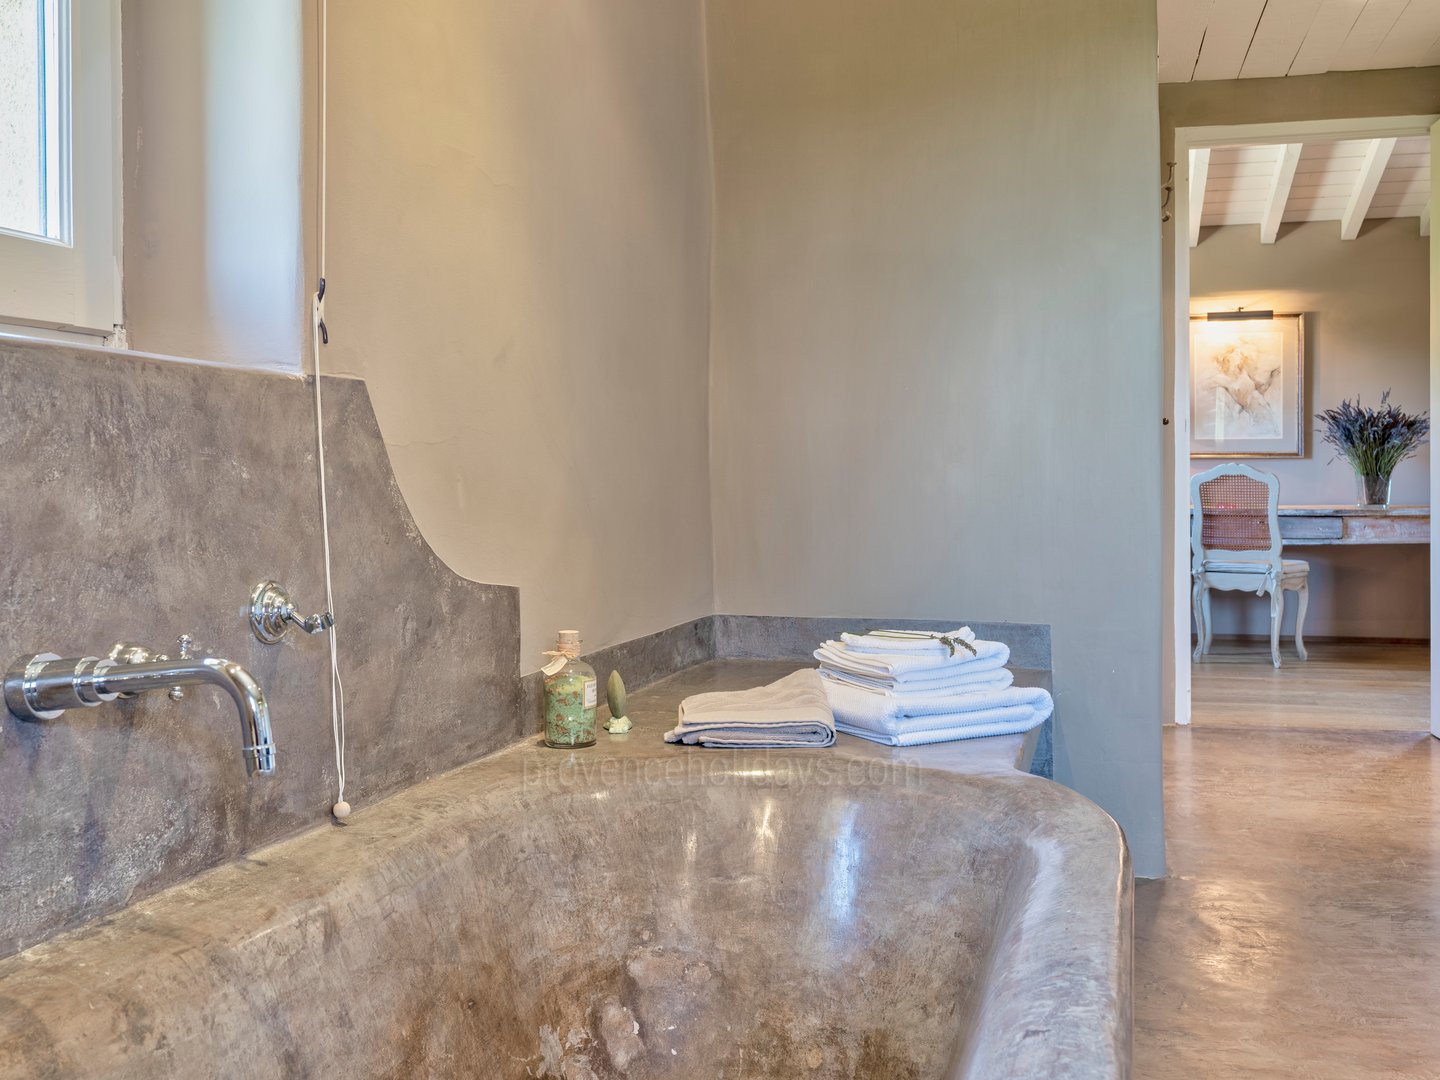 64 - Domaine de la Sainte Victoire: Villa: Bathroom